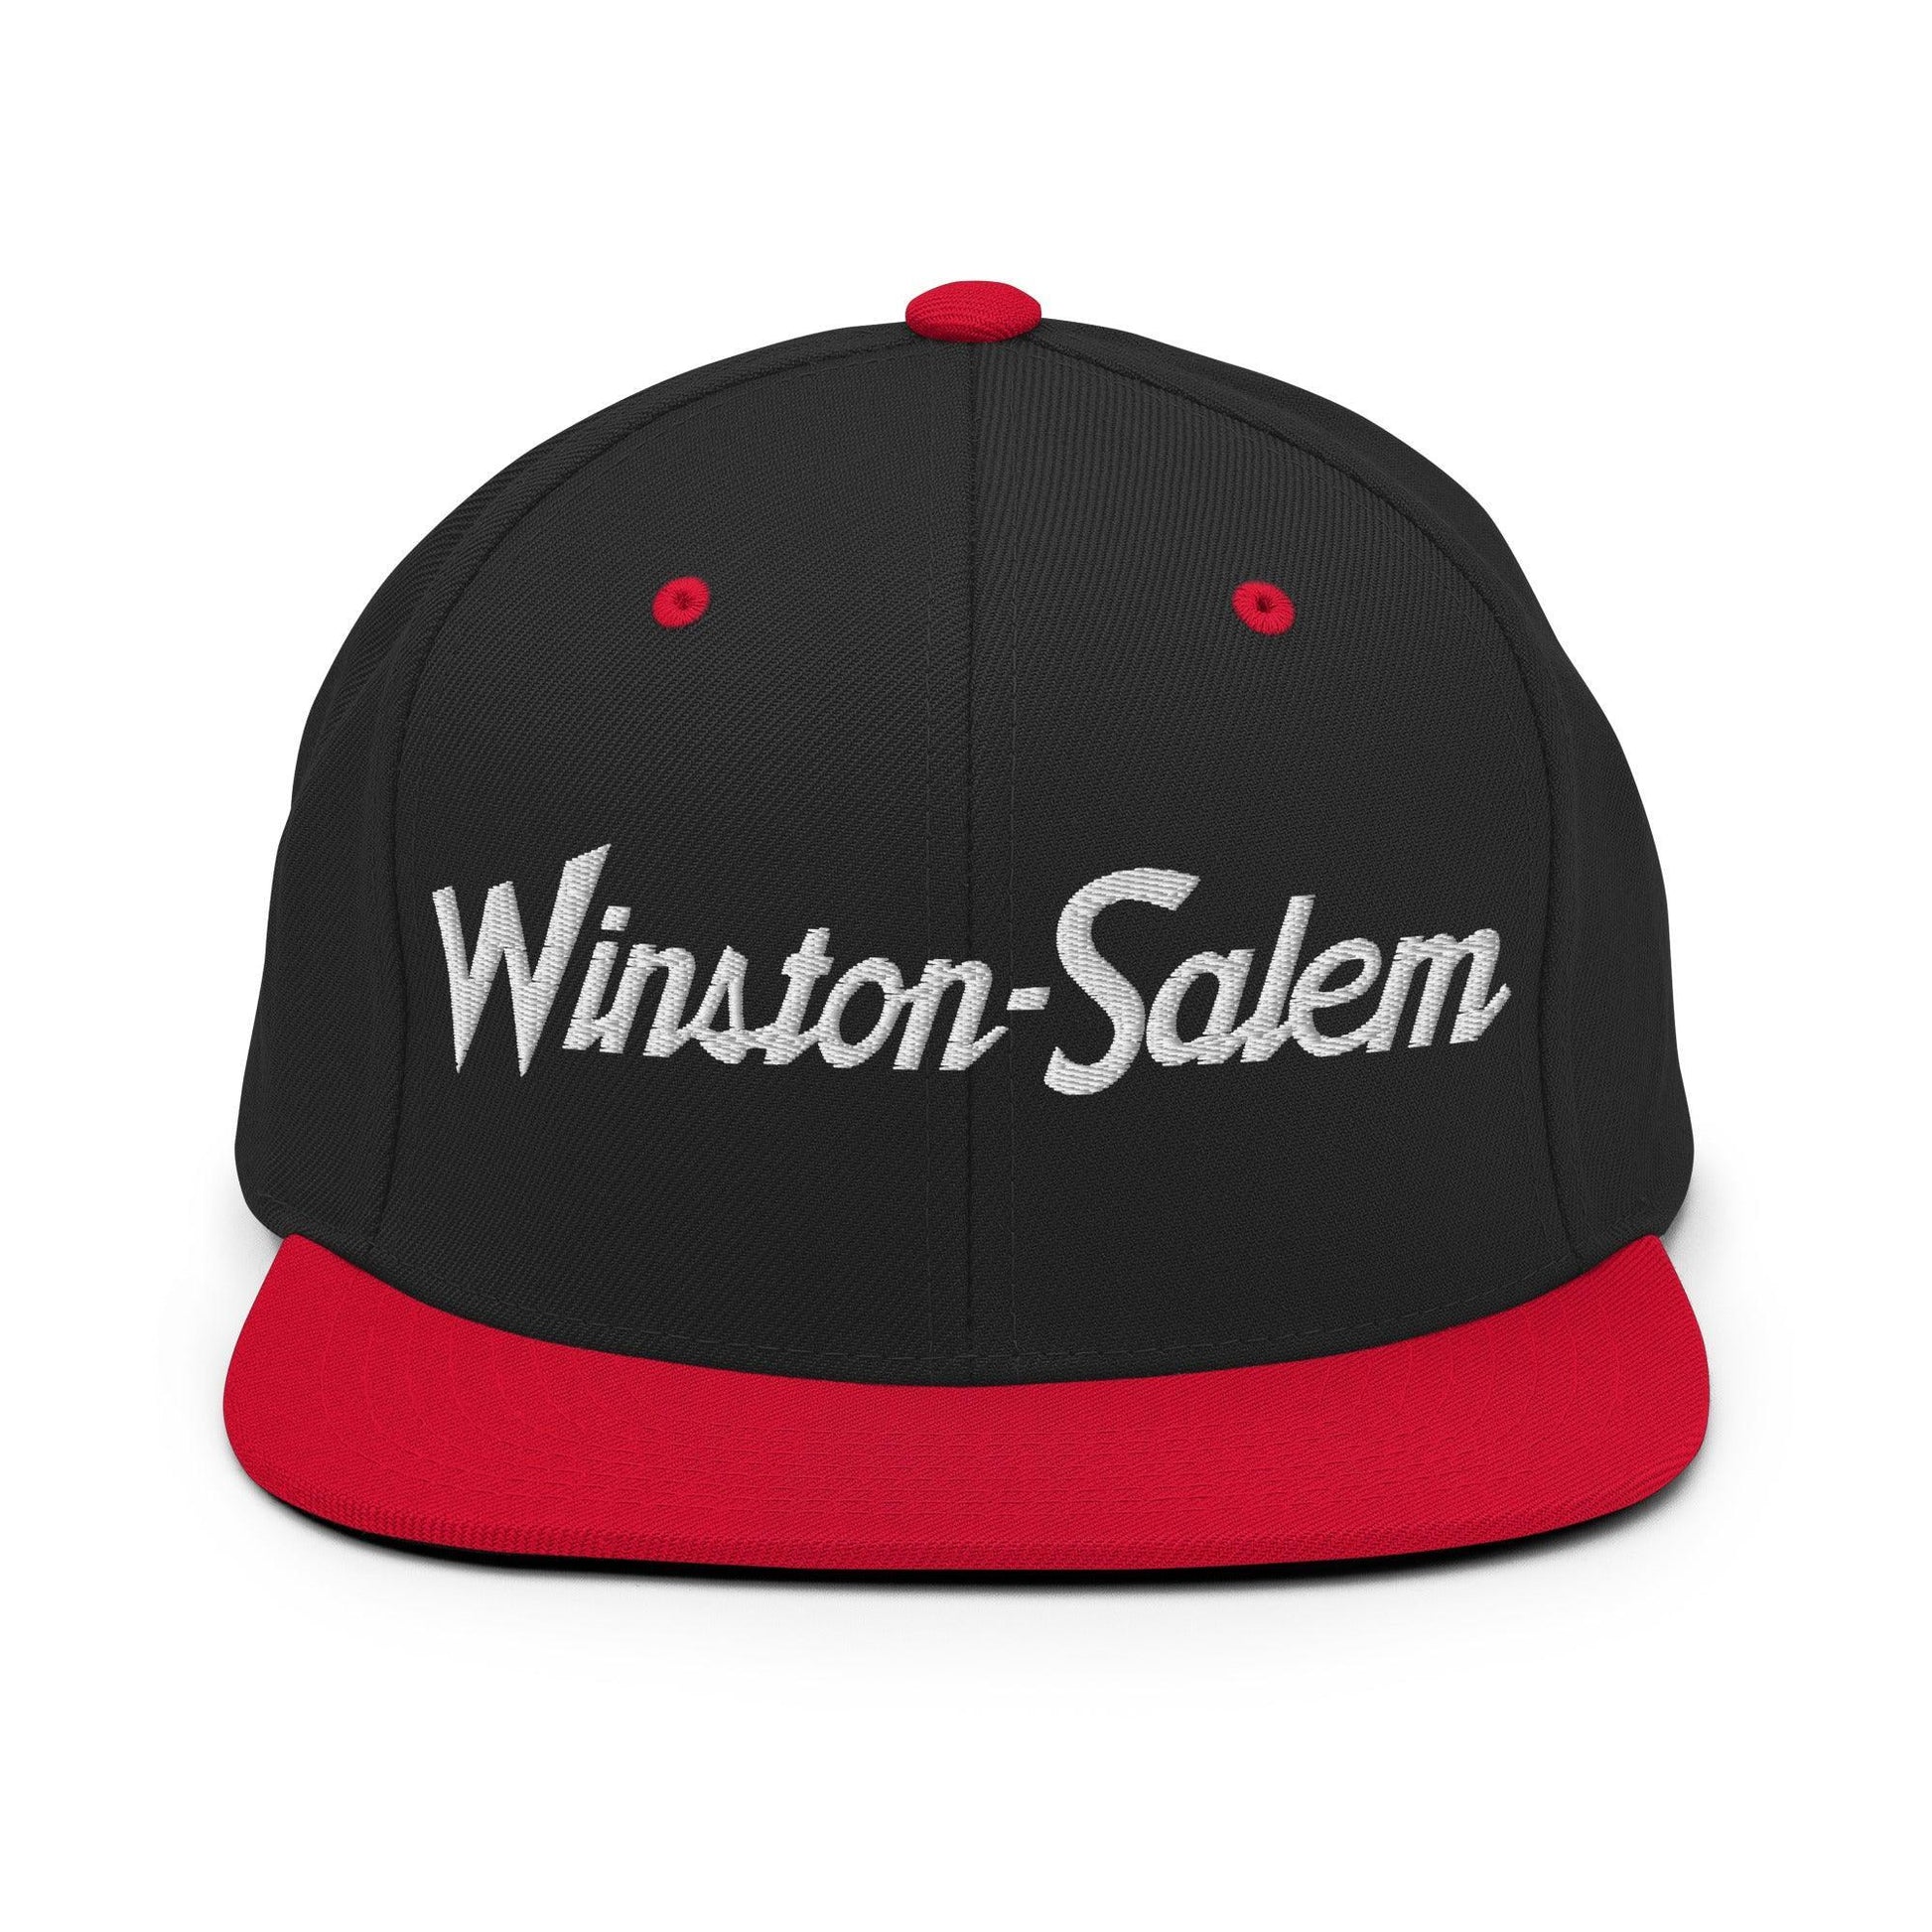 Winston-Salem Script Snapback Hat Black/ Red